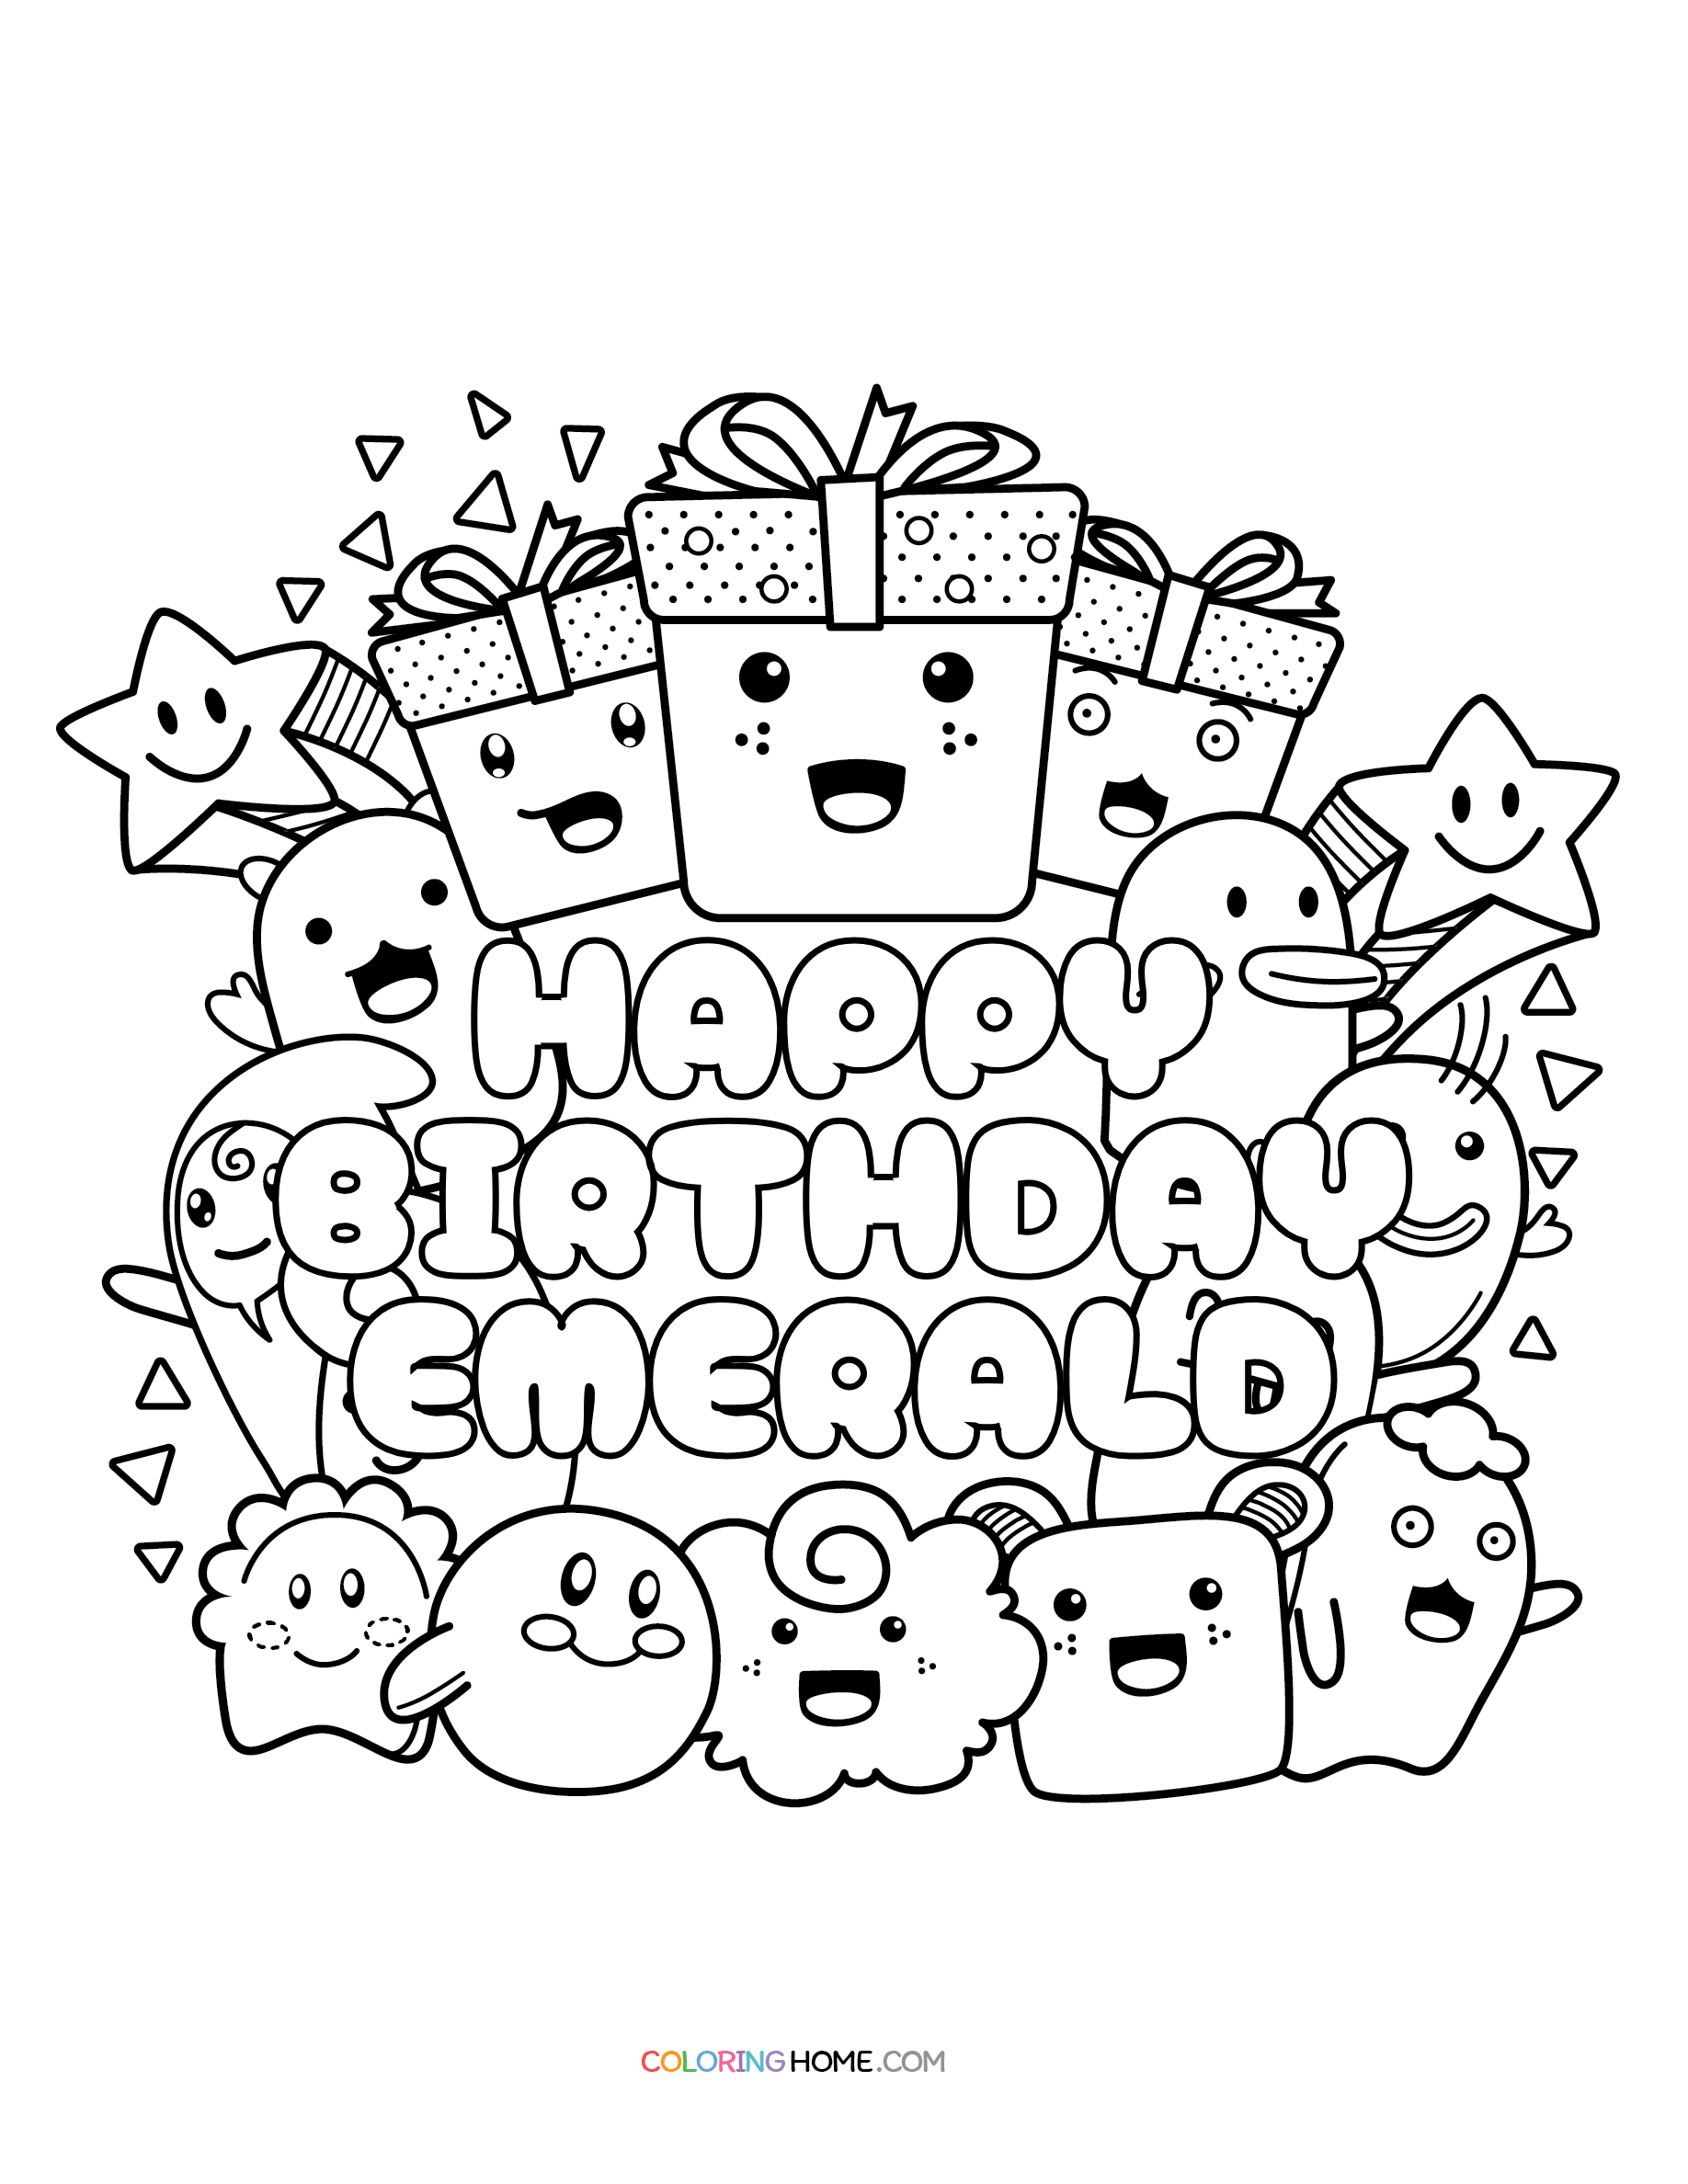 Happy Birthday Emerald coloring page